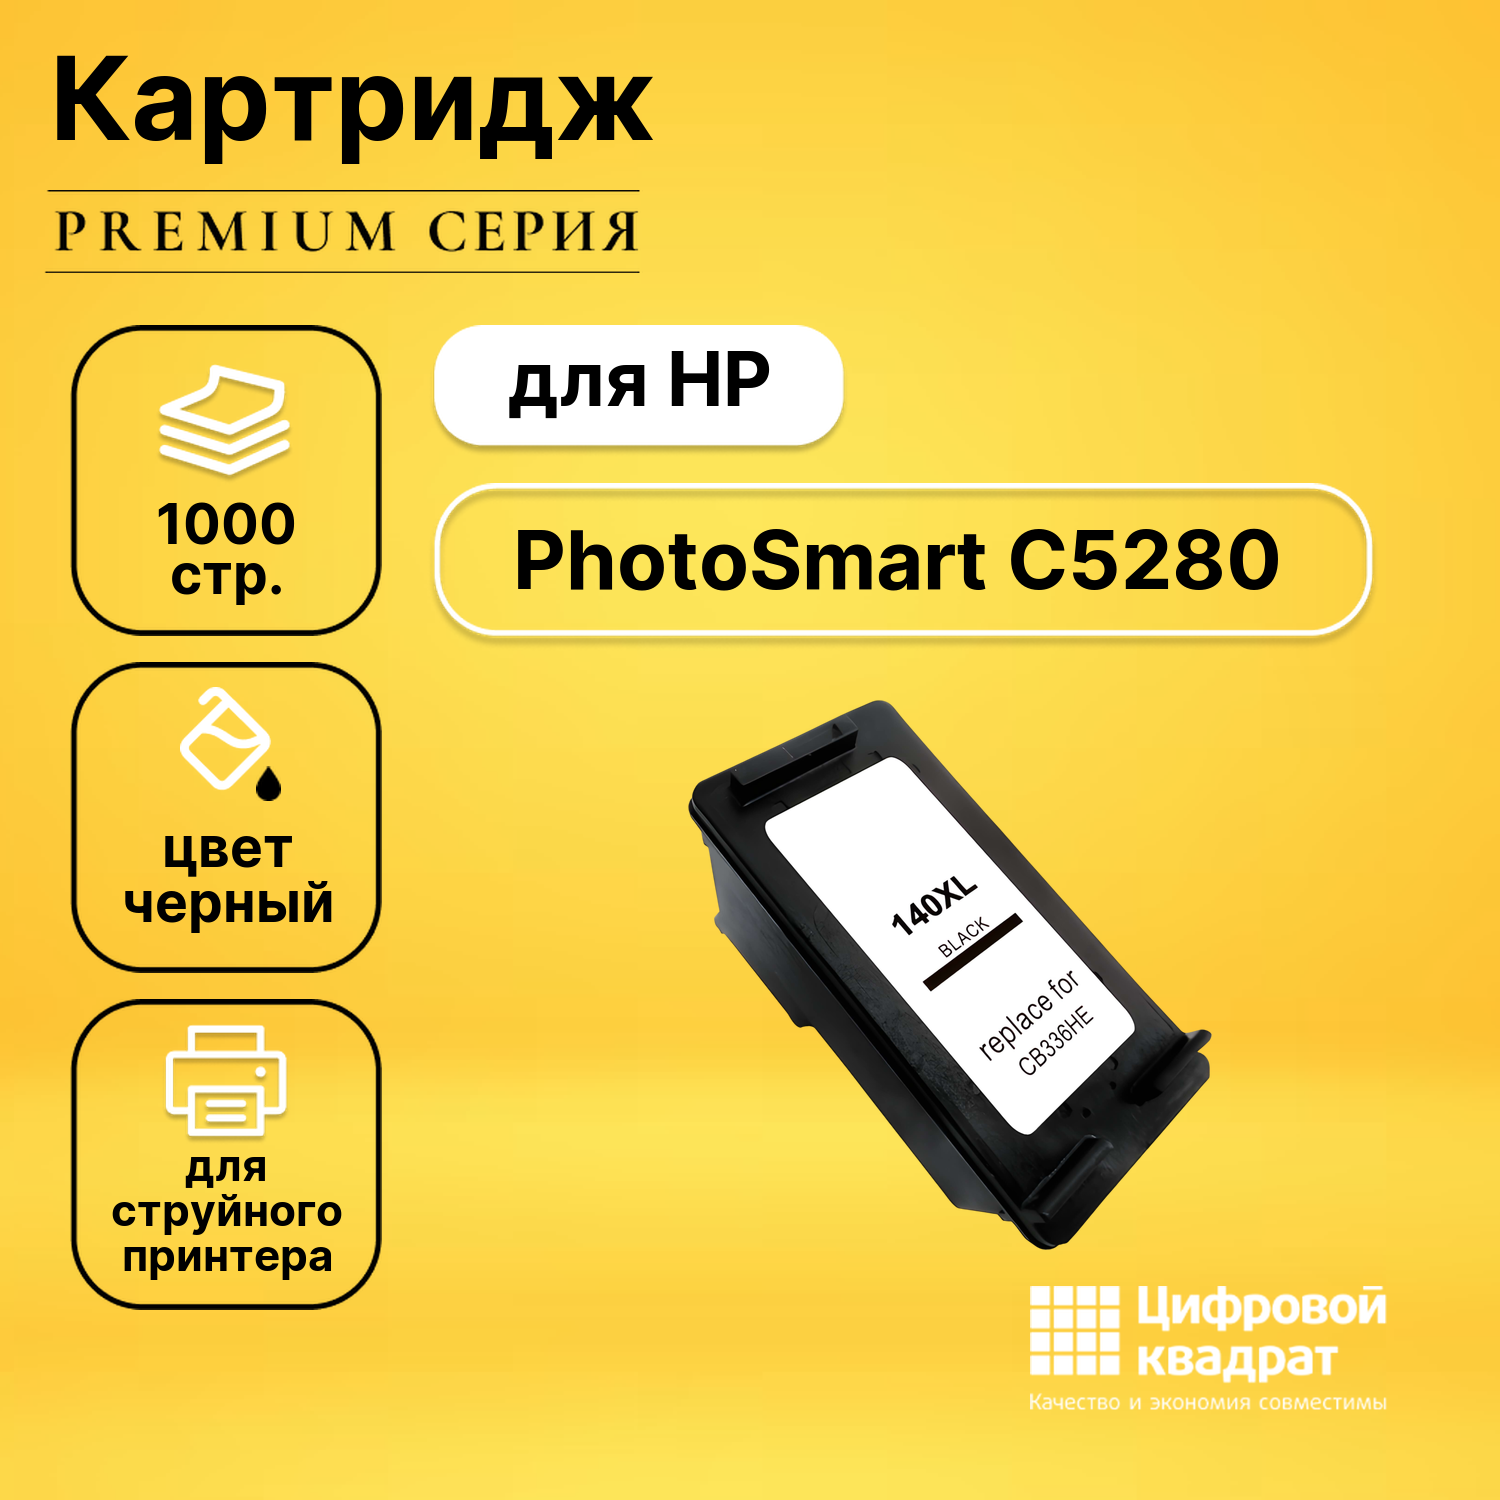 Картридж DS для HP PhotoSmart C5280 совместимый